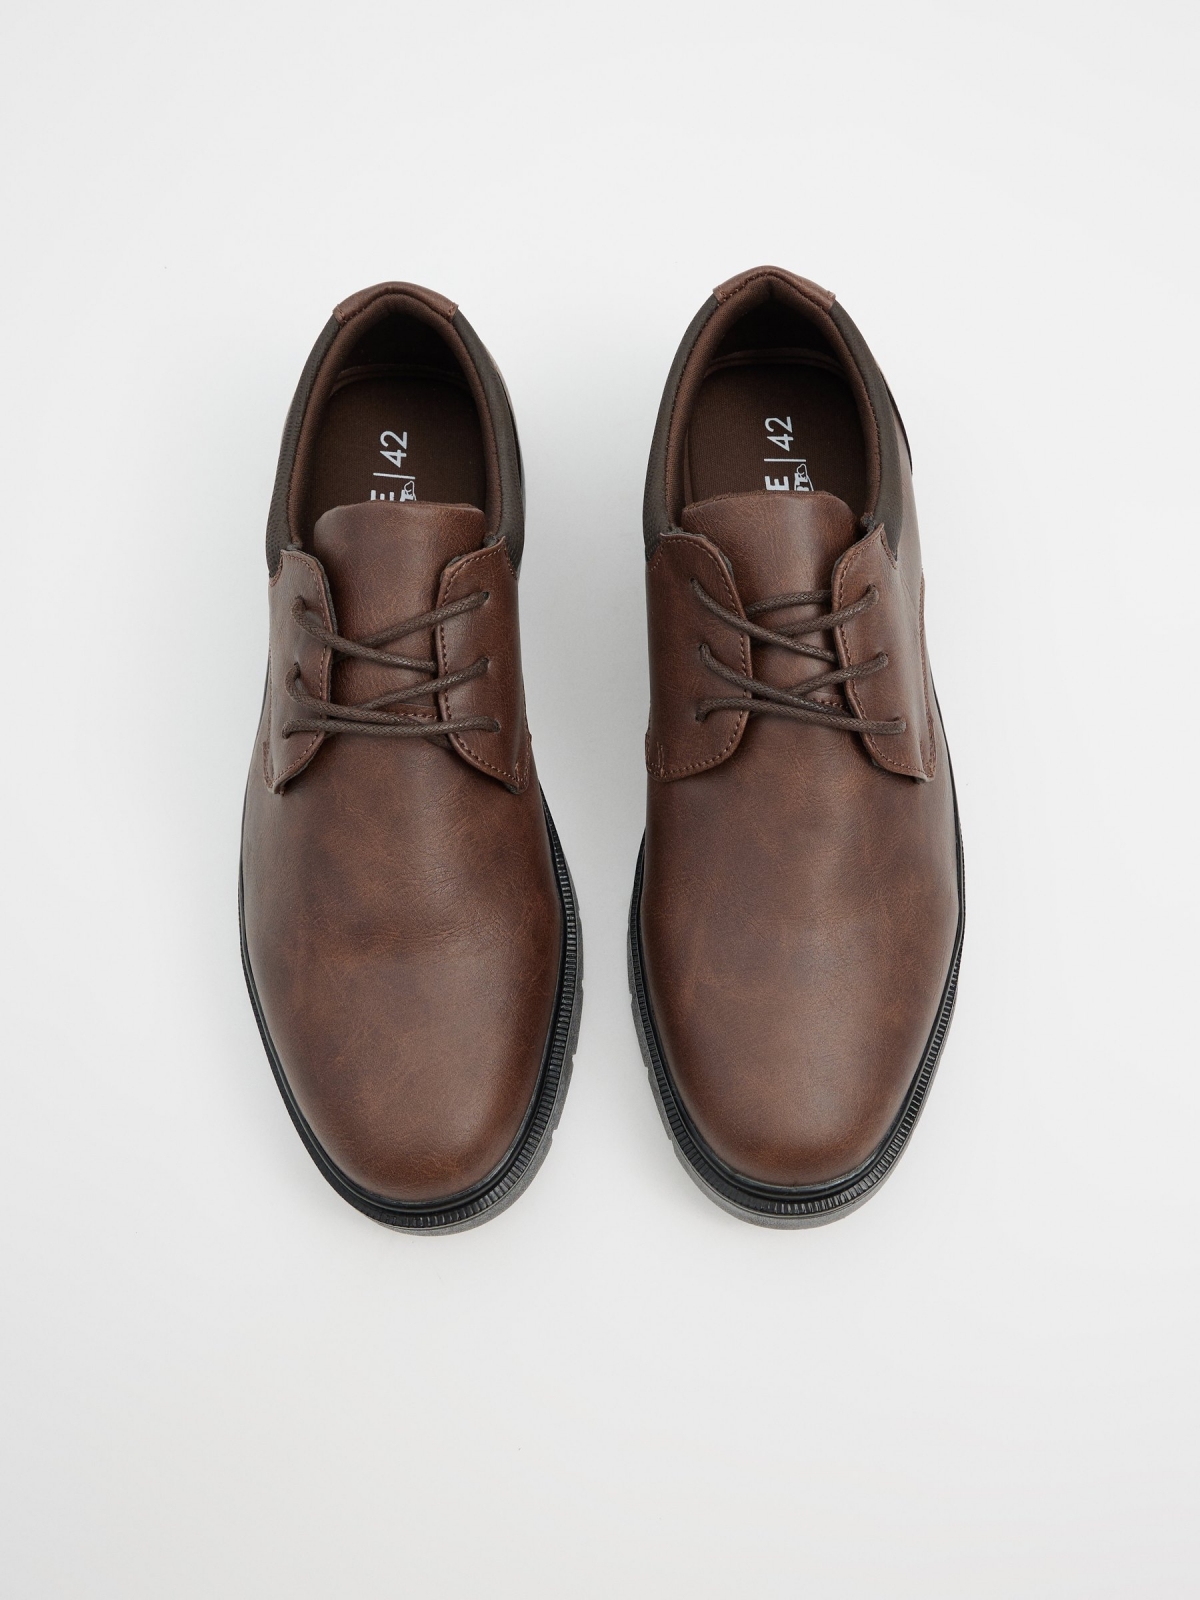 Sapato marrom efeito de couro marrom escuro vista superior